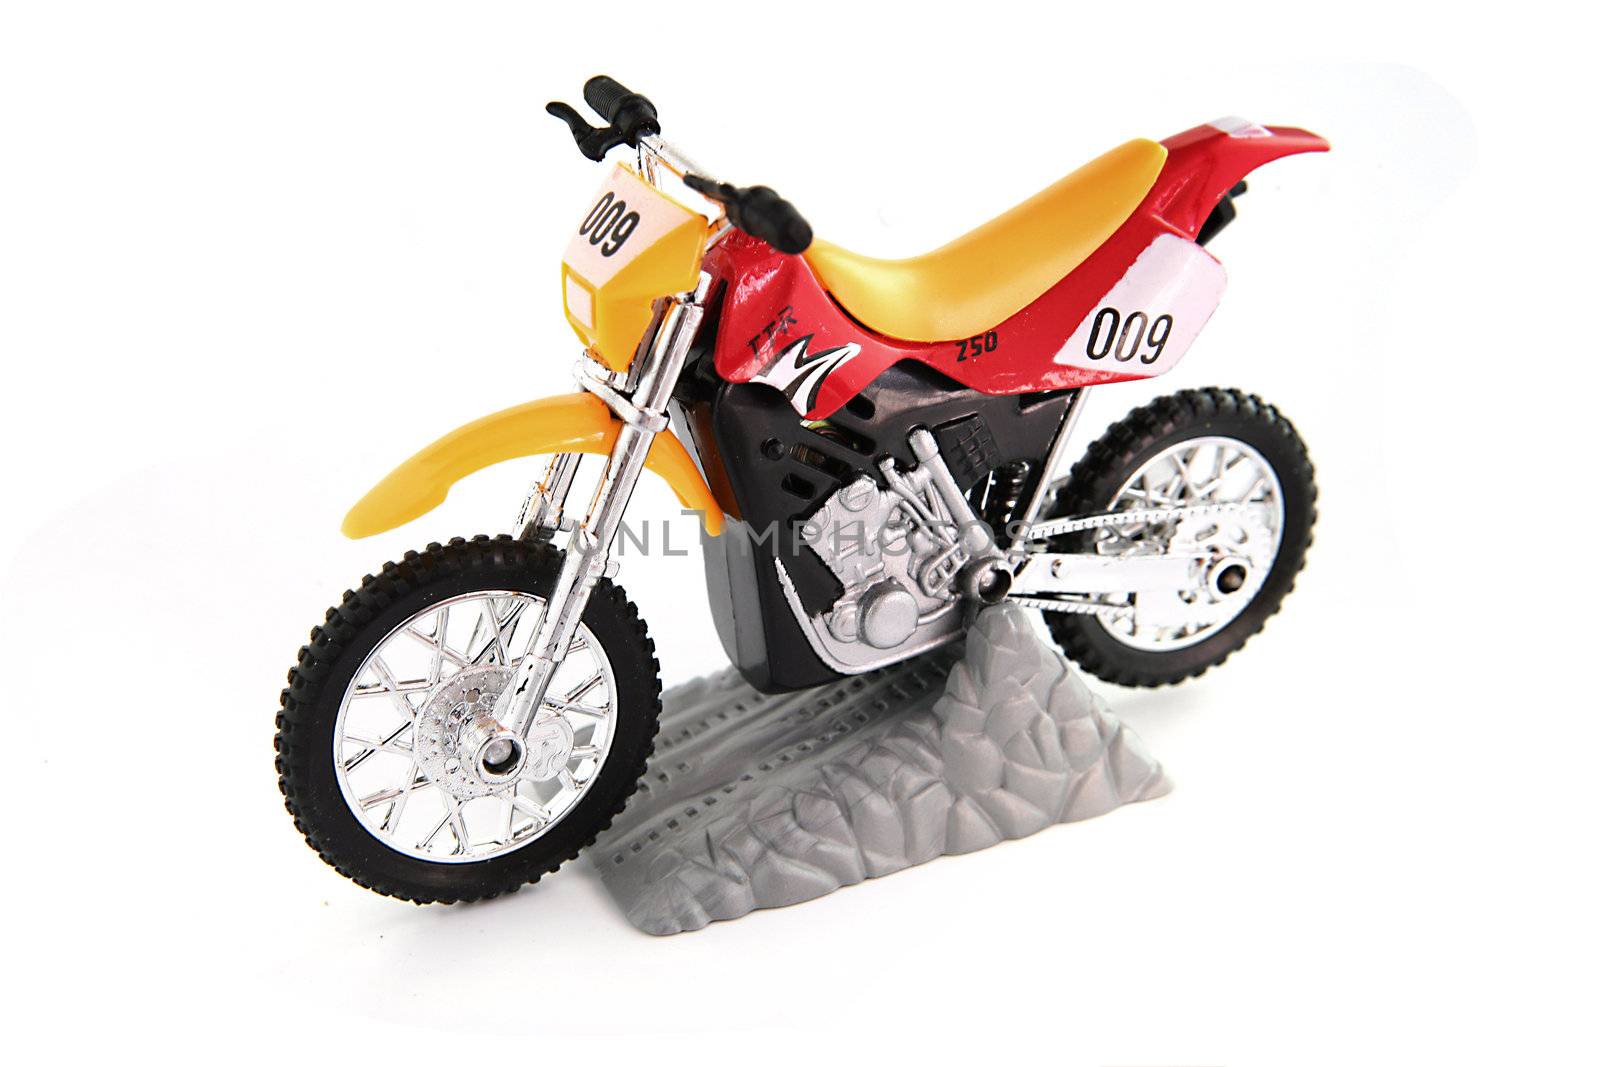 Toy motocross bike by phovoir